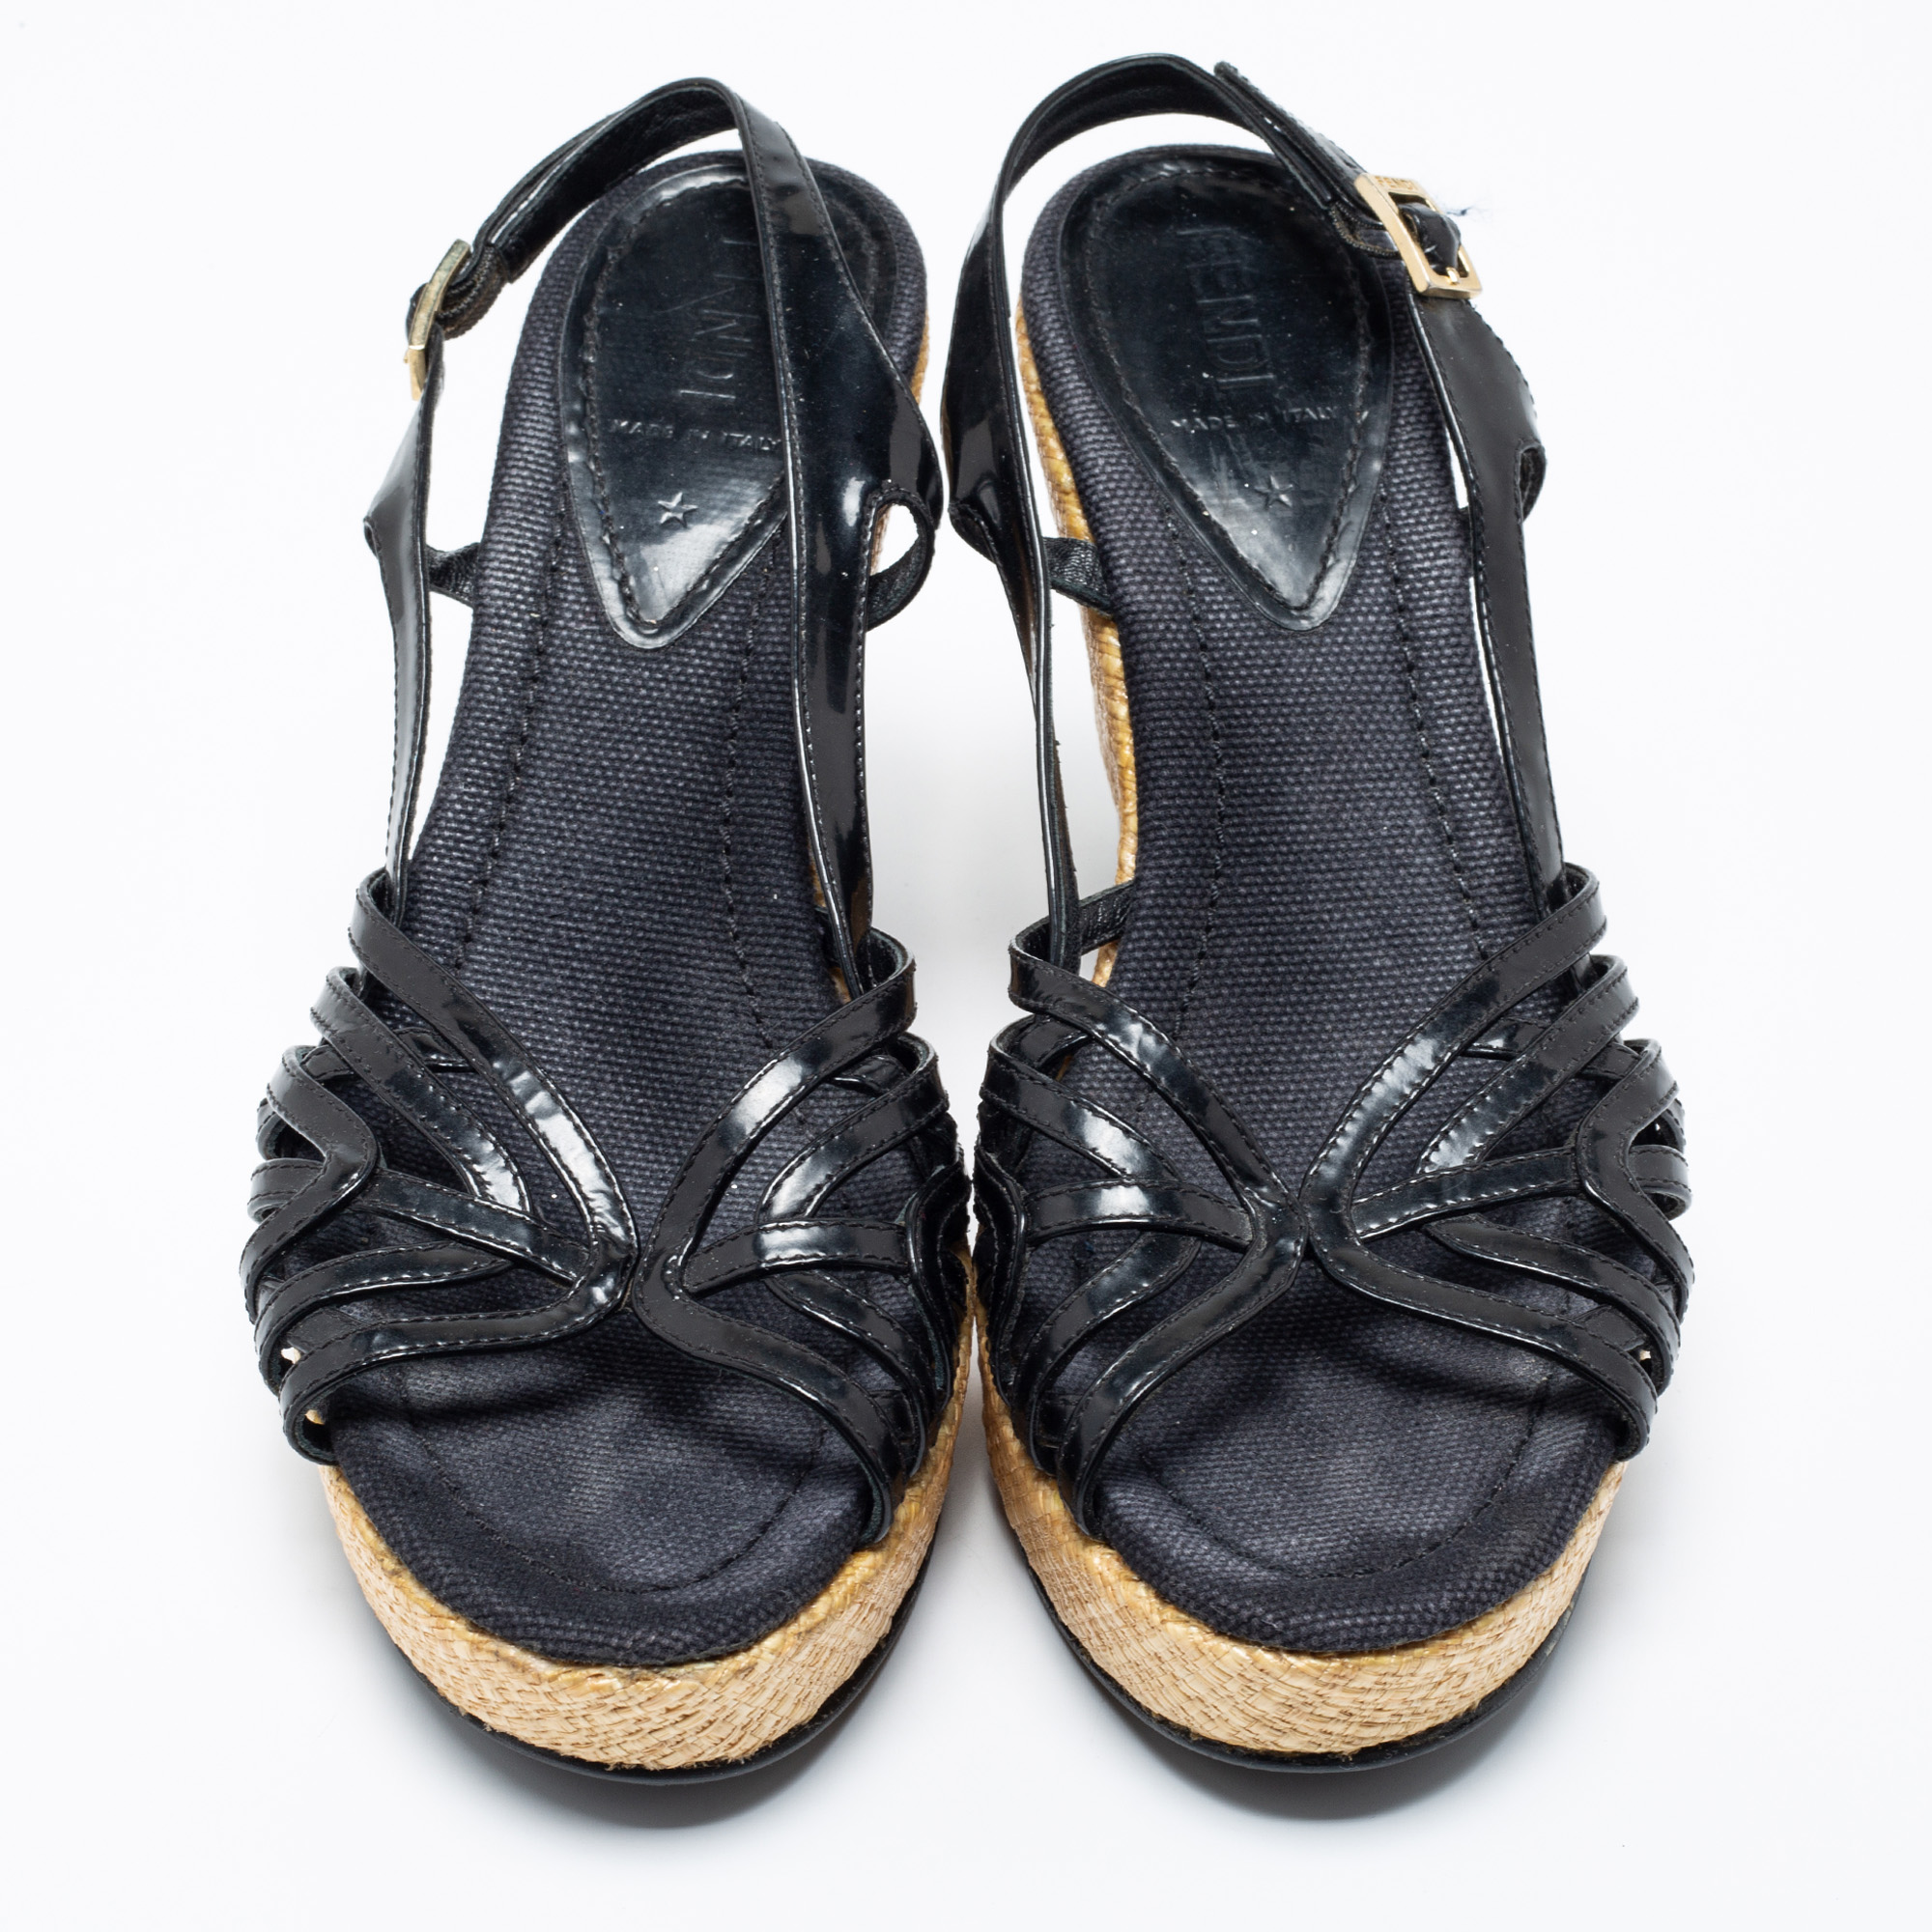 Fendi Black Patent Leather Platform Wedge Heel Slingback Sandals Size 37